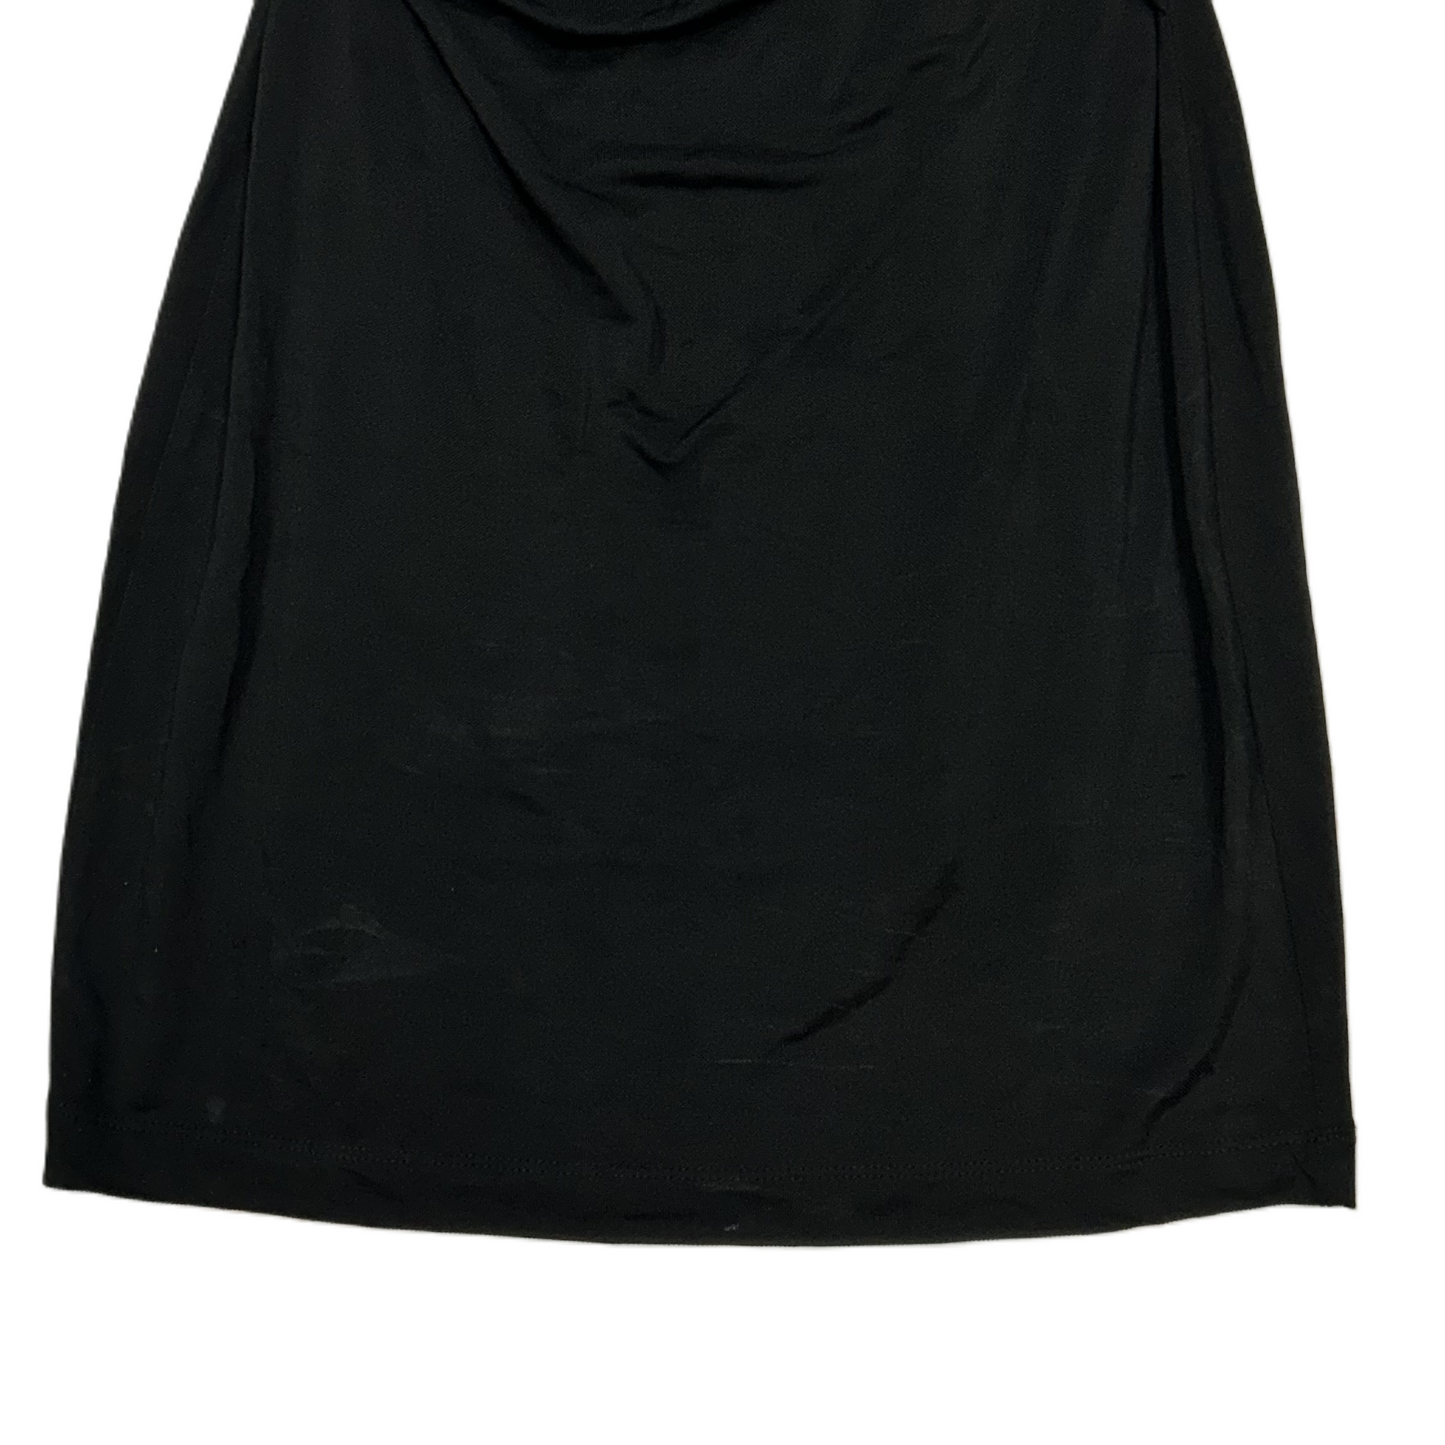 Black Dress Designer By Alexander Wang, Size: M